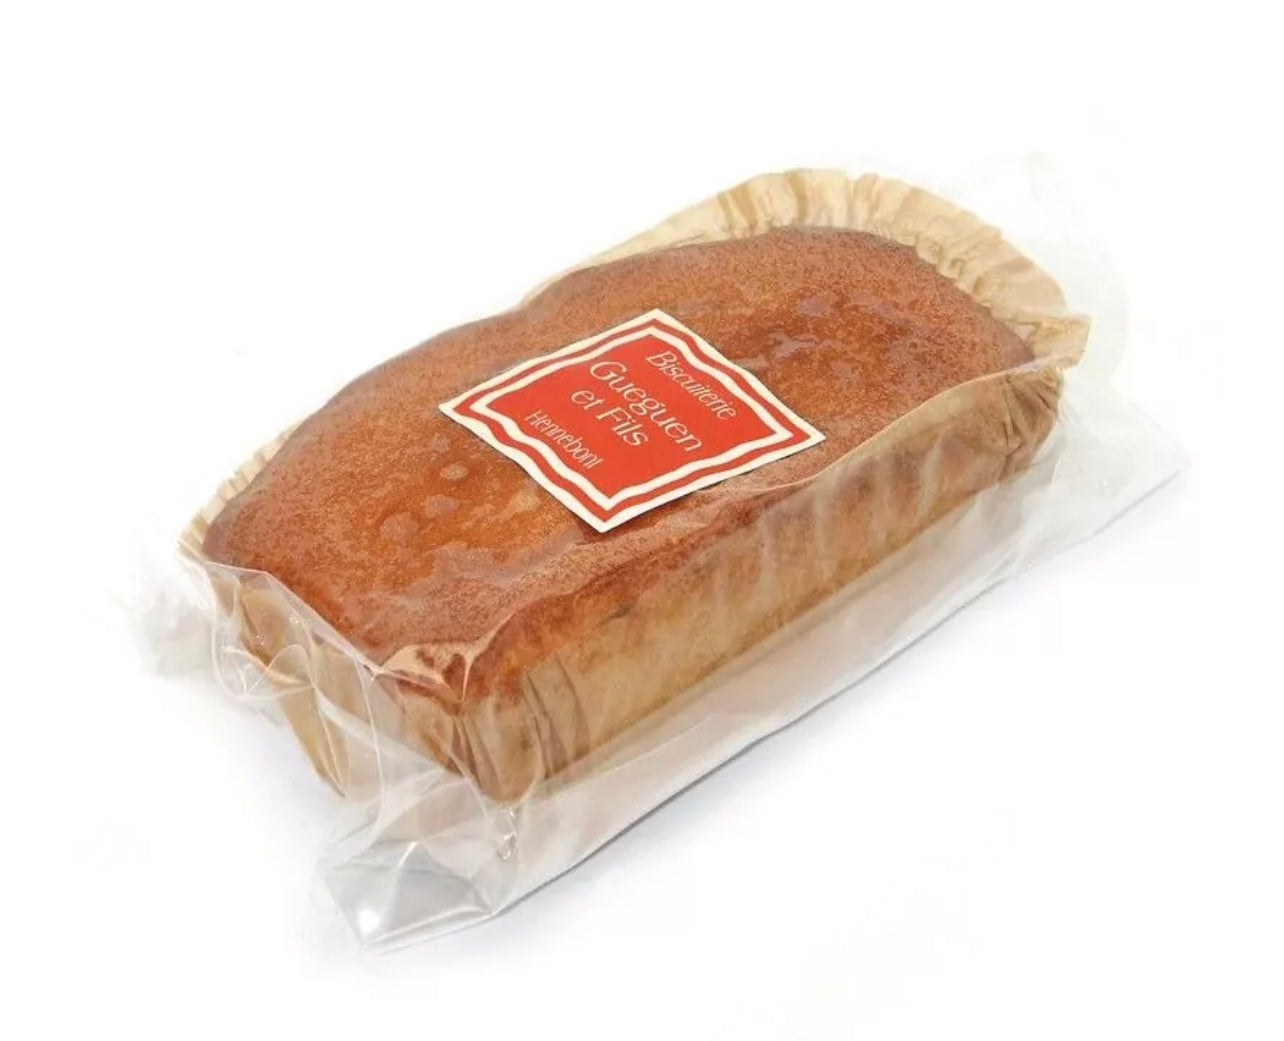 Breton pound cake - 250g